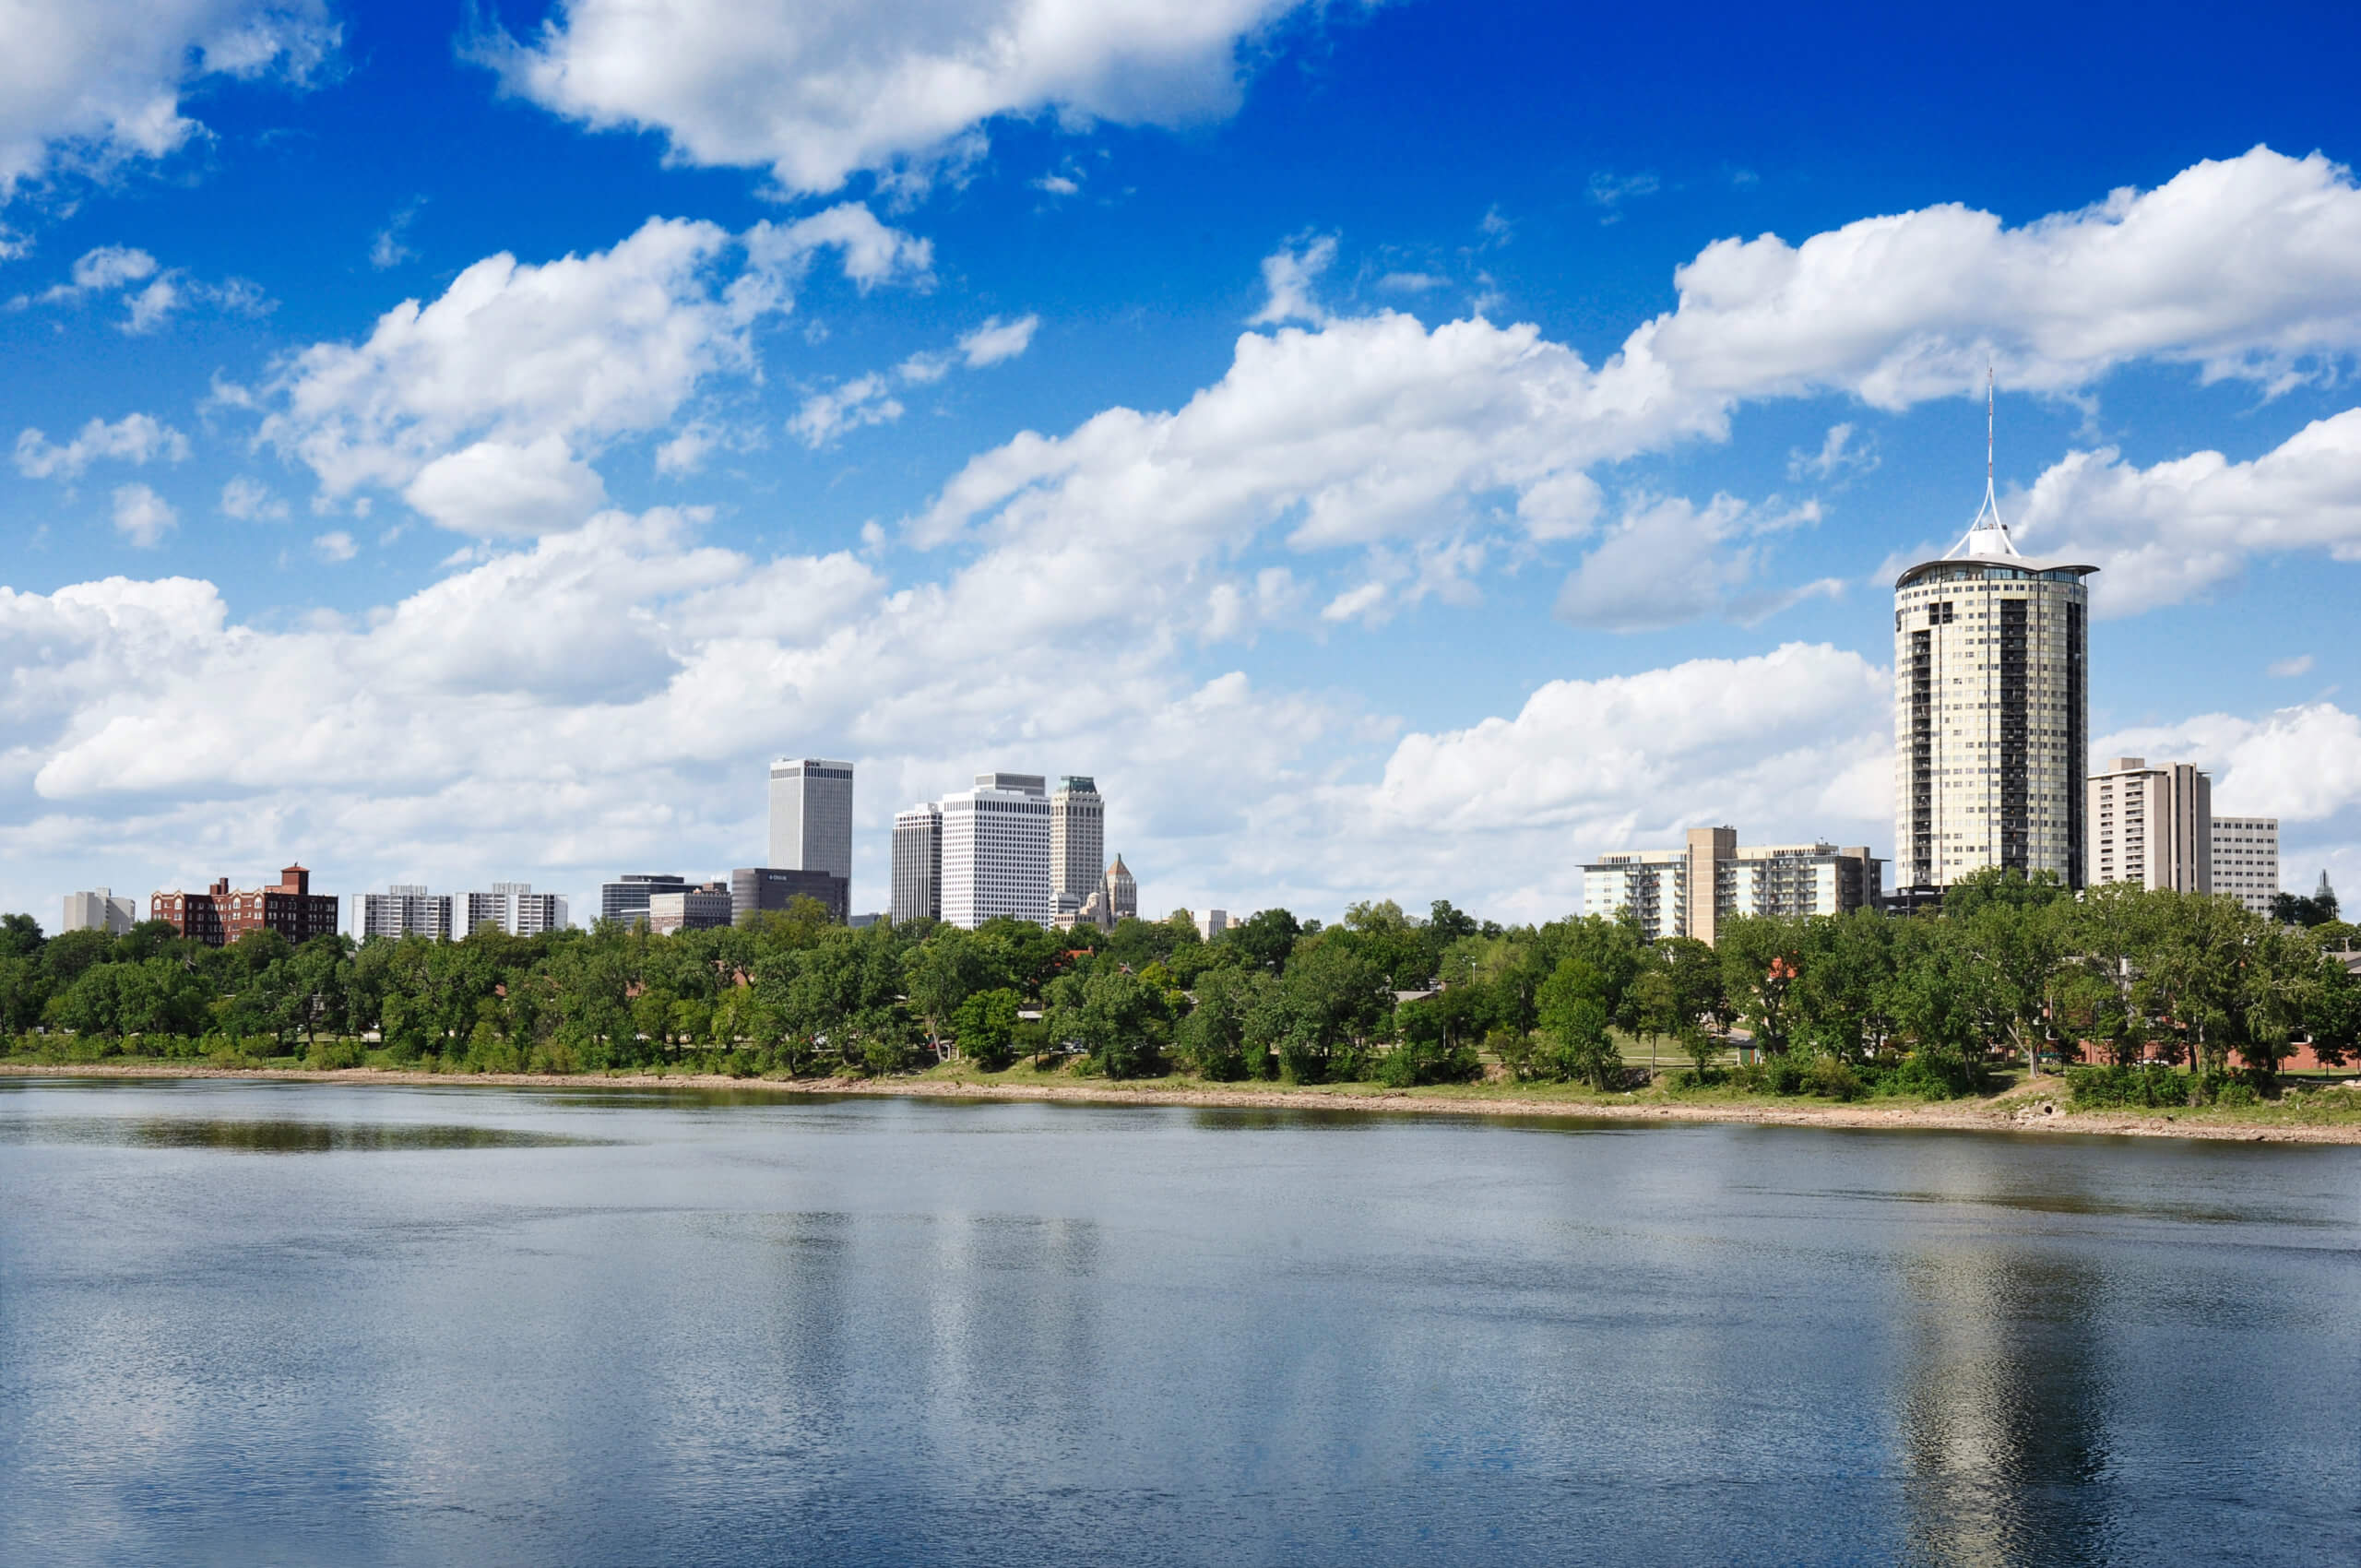 Tulsa skyline across the river